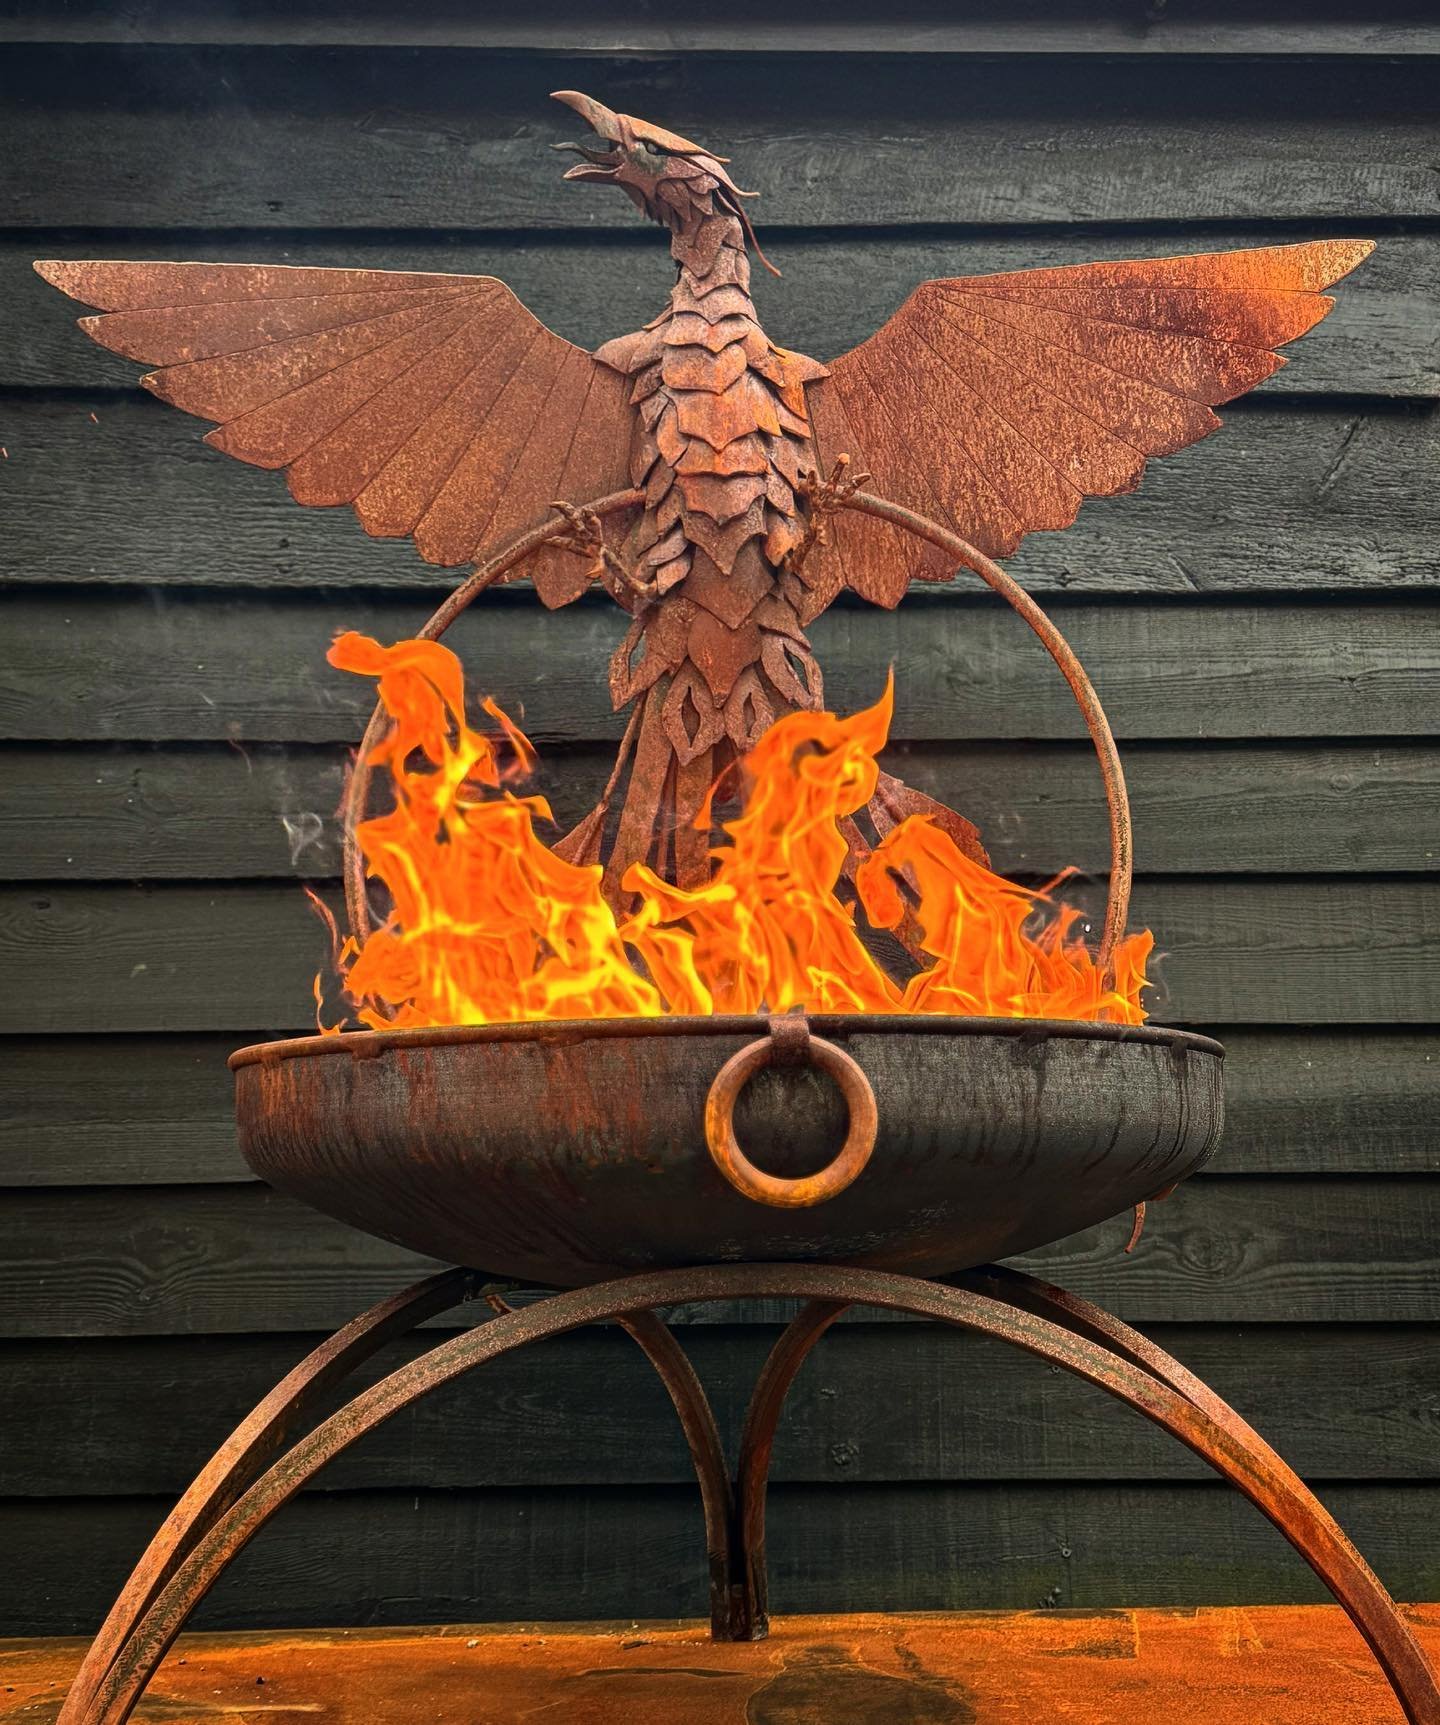 The Phoenix rises! Welded steel sculpture and firebowl. #firebowl #fire #firepit #gardensculpture #blacksmith #artistblacksmith #metalwork #madeinsuffolk #handmade #weldedsculpture #sculpture #phoenix #firebird #gardendesignsideas #metalart #artistic